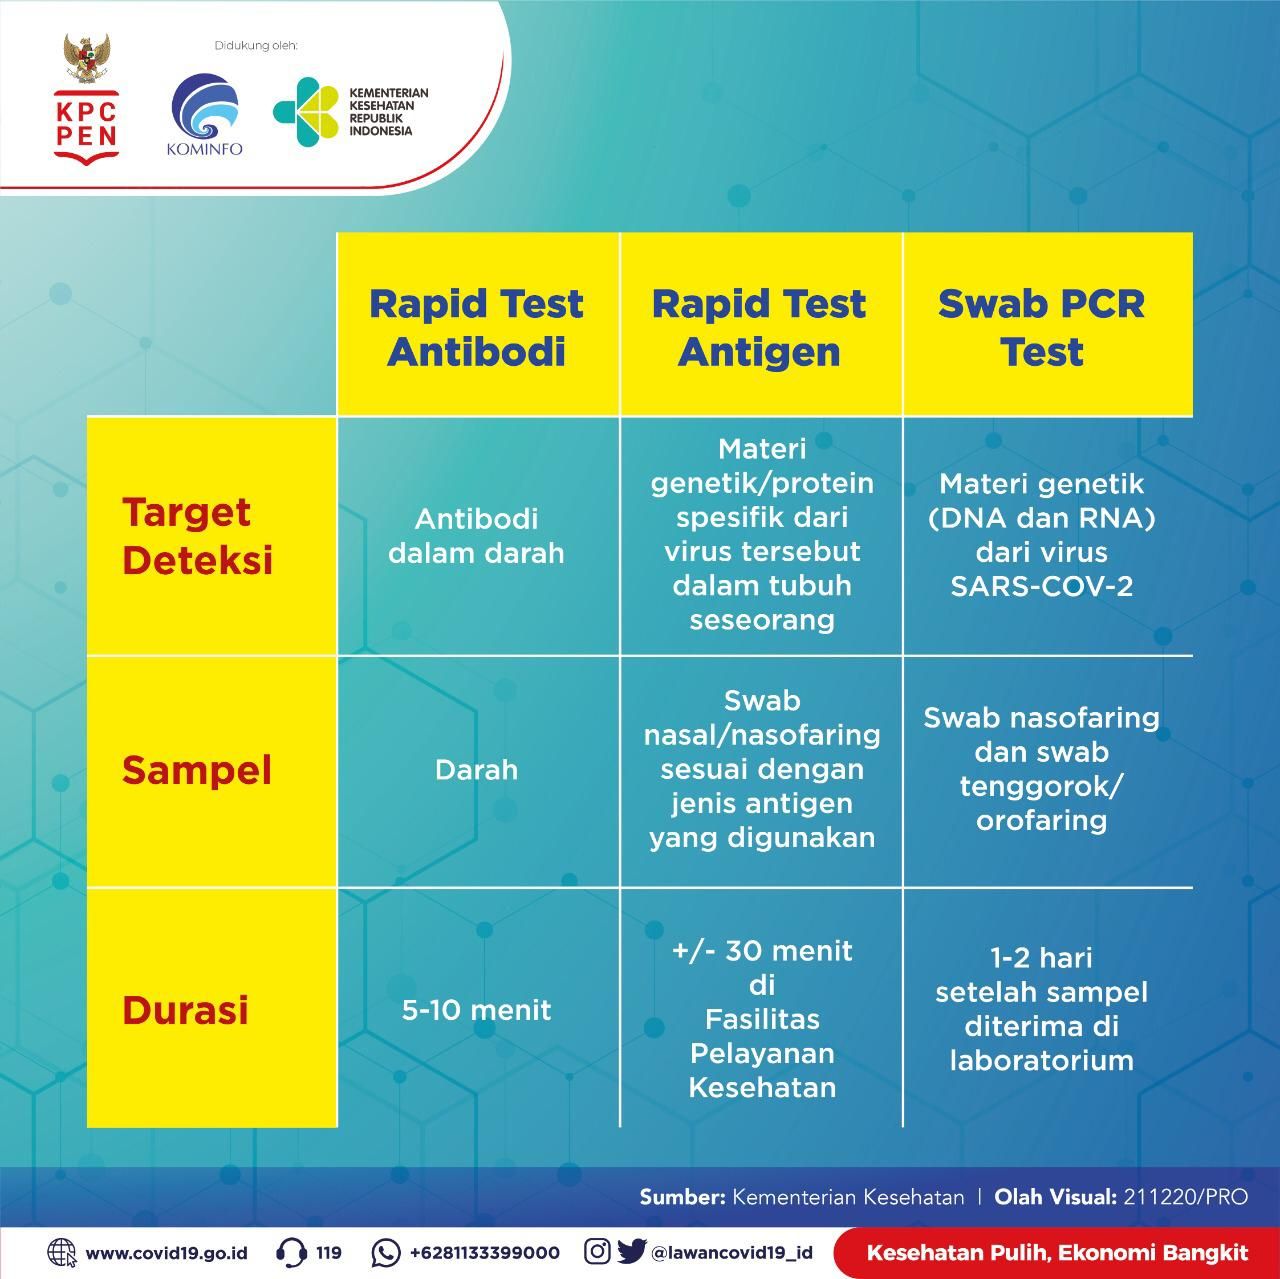 Perbedaan rapid test antibodi, antigen dan seab PCR